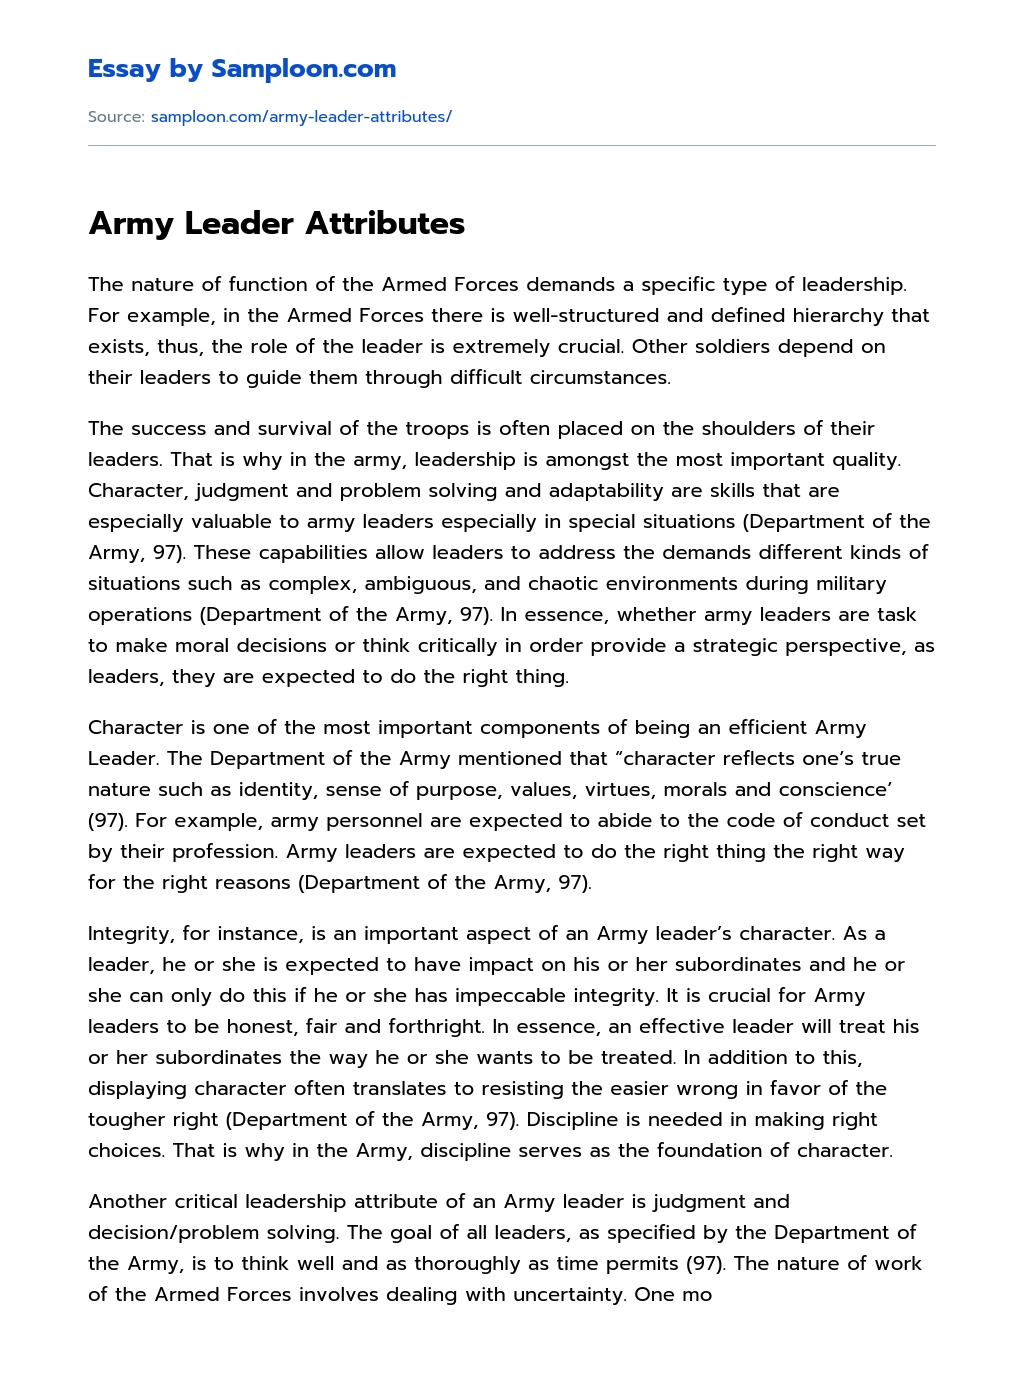 army values informative essay blc